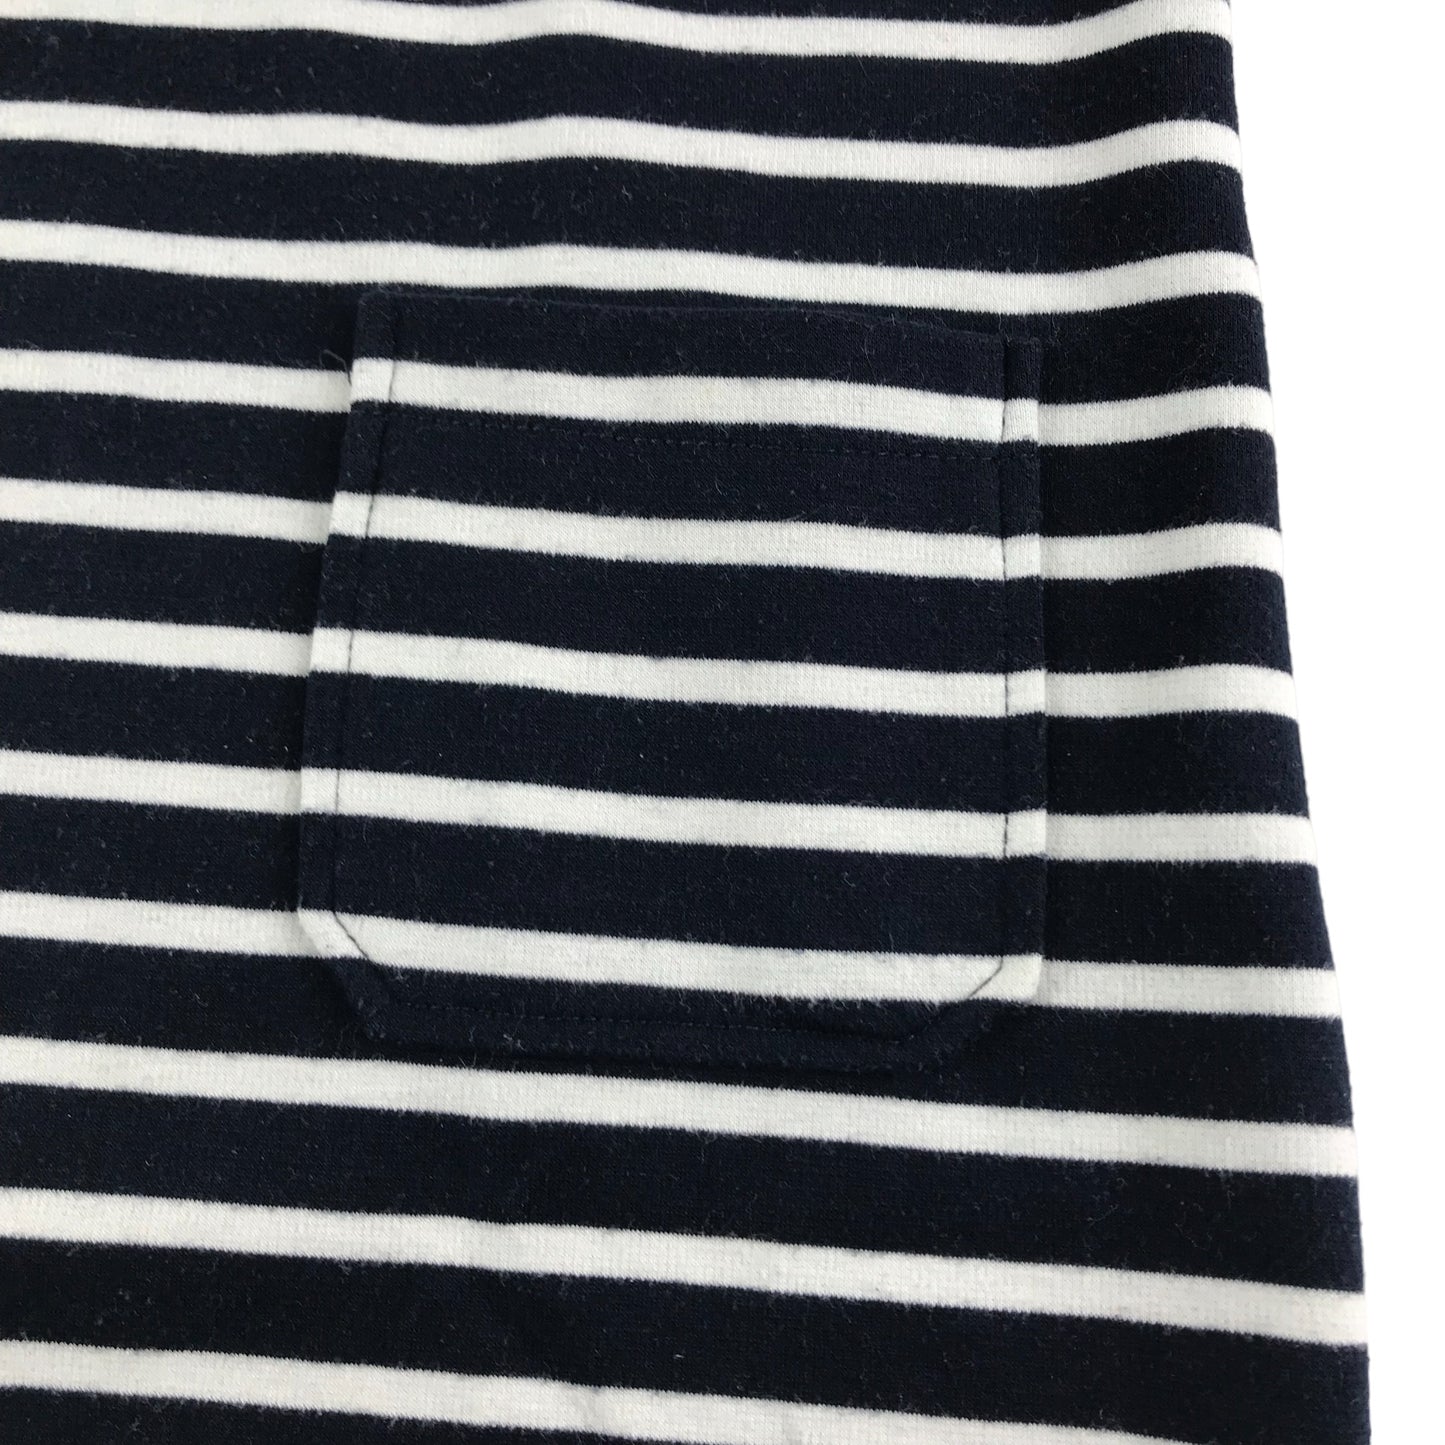 Monoprix Dress Age 11 Black White Stripy A-line Collared